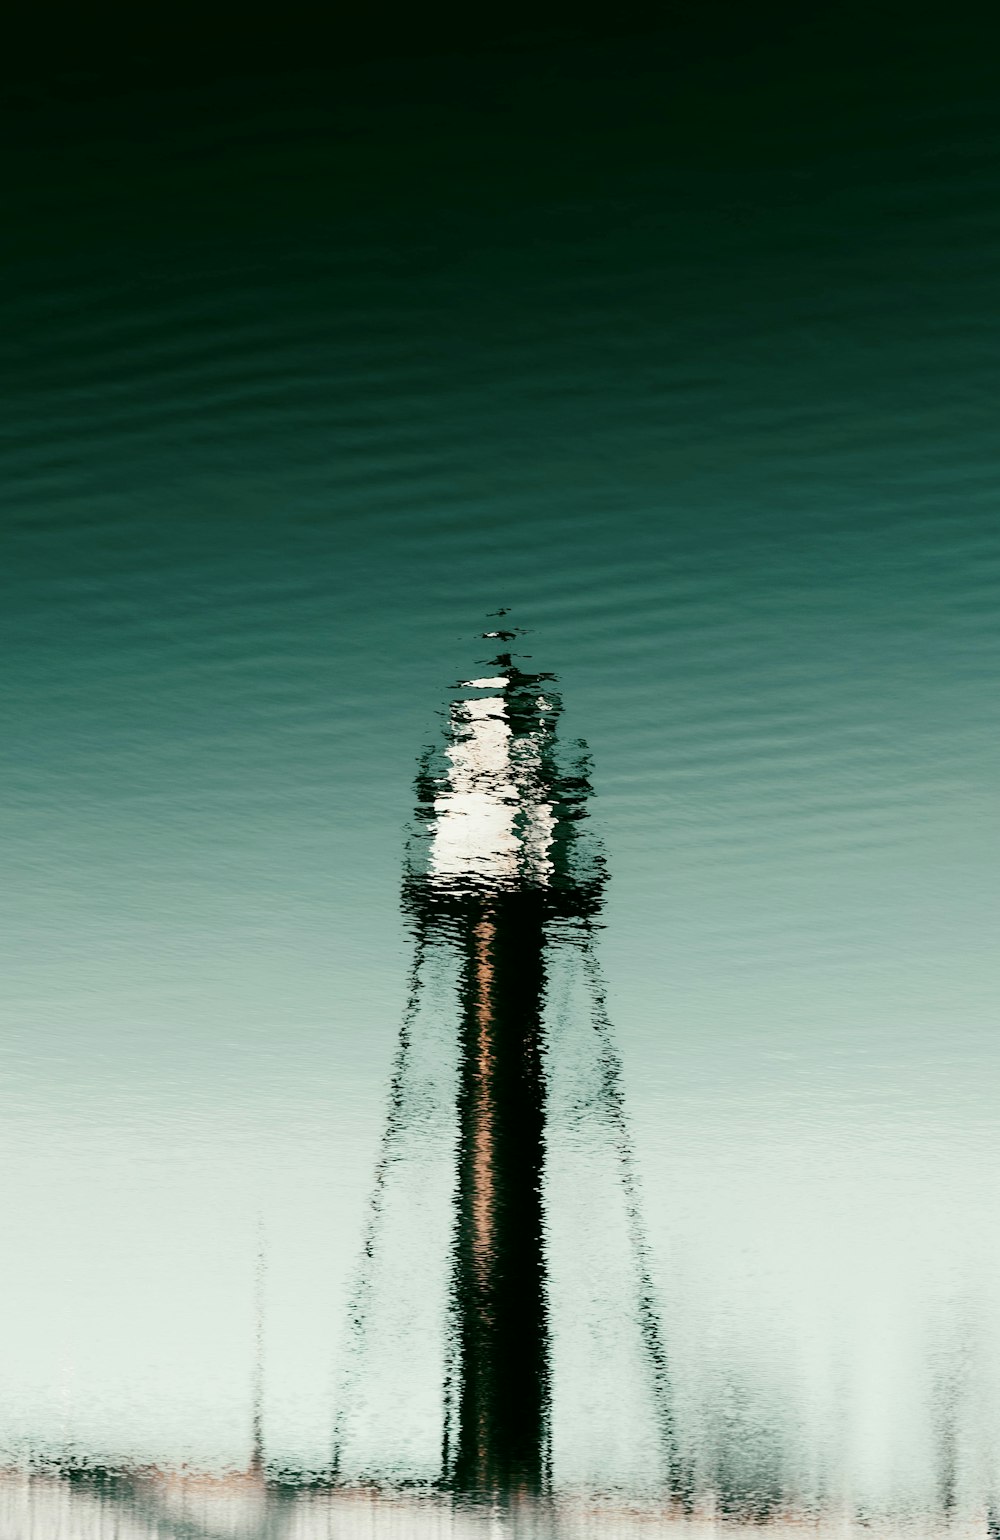 a blurry photo of a lighthouse on a beach